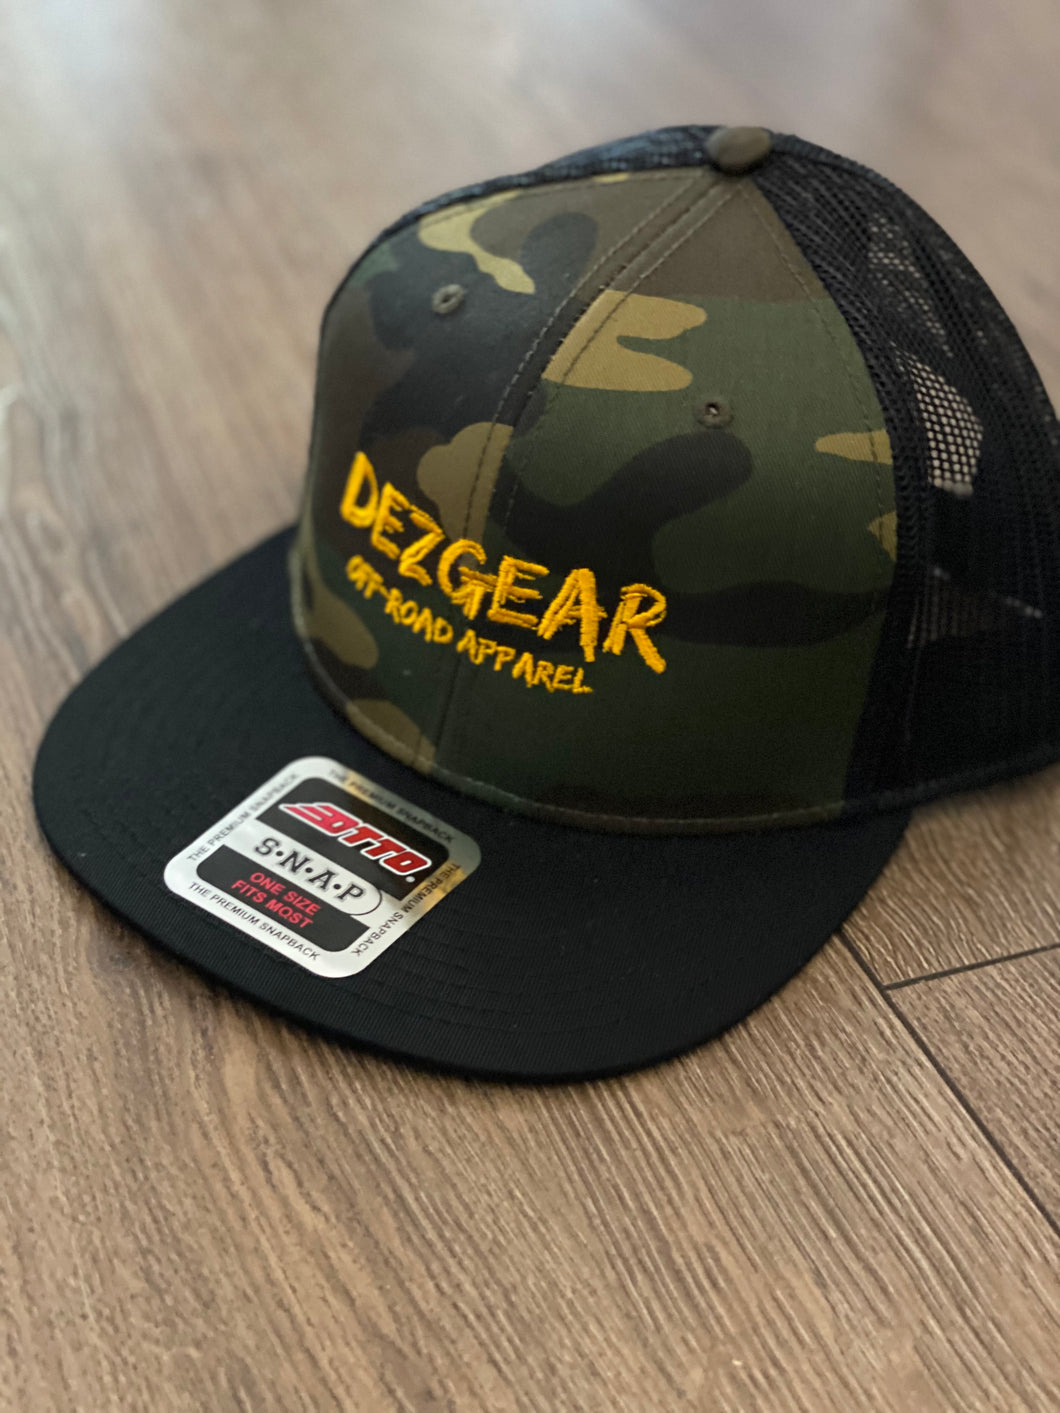 DezGear Camo SnapBack Trucker Hat